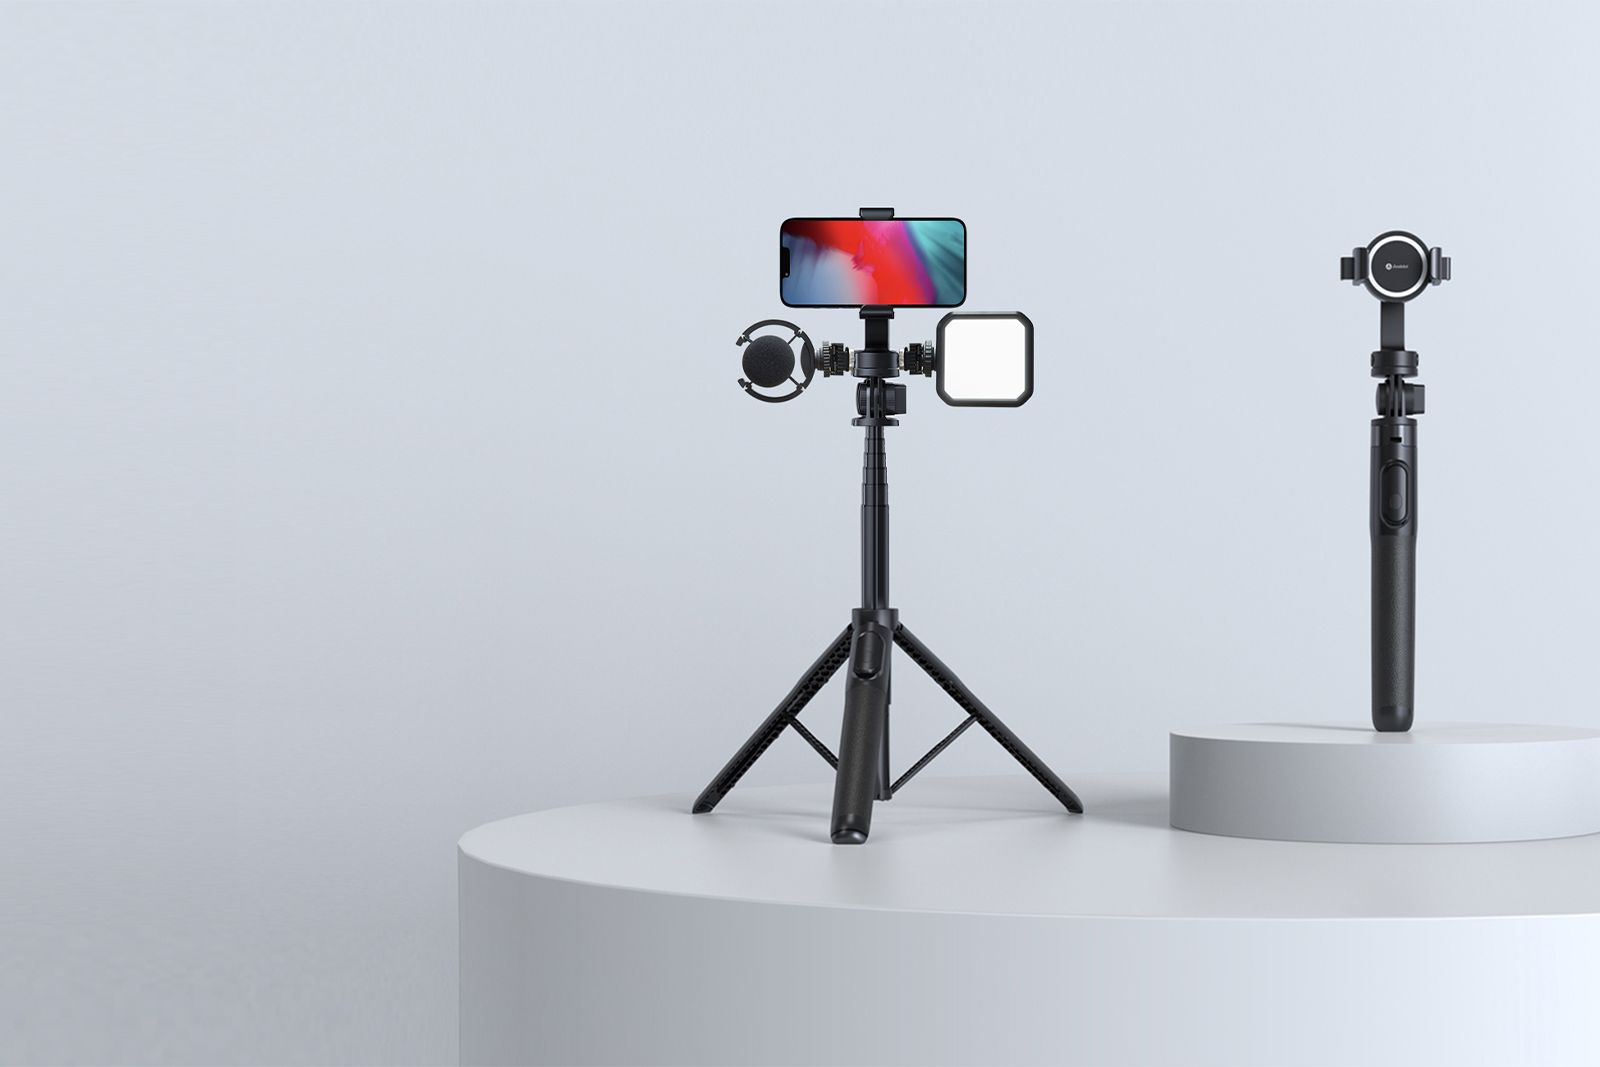 Andobil announces a Kickstarter campaign for its selfie stick/tripod combo photo 5